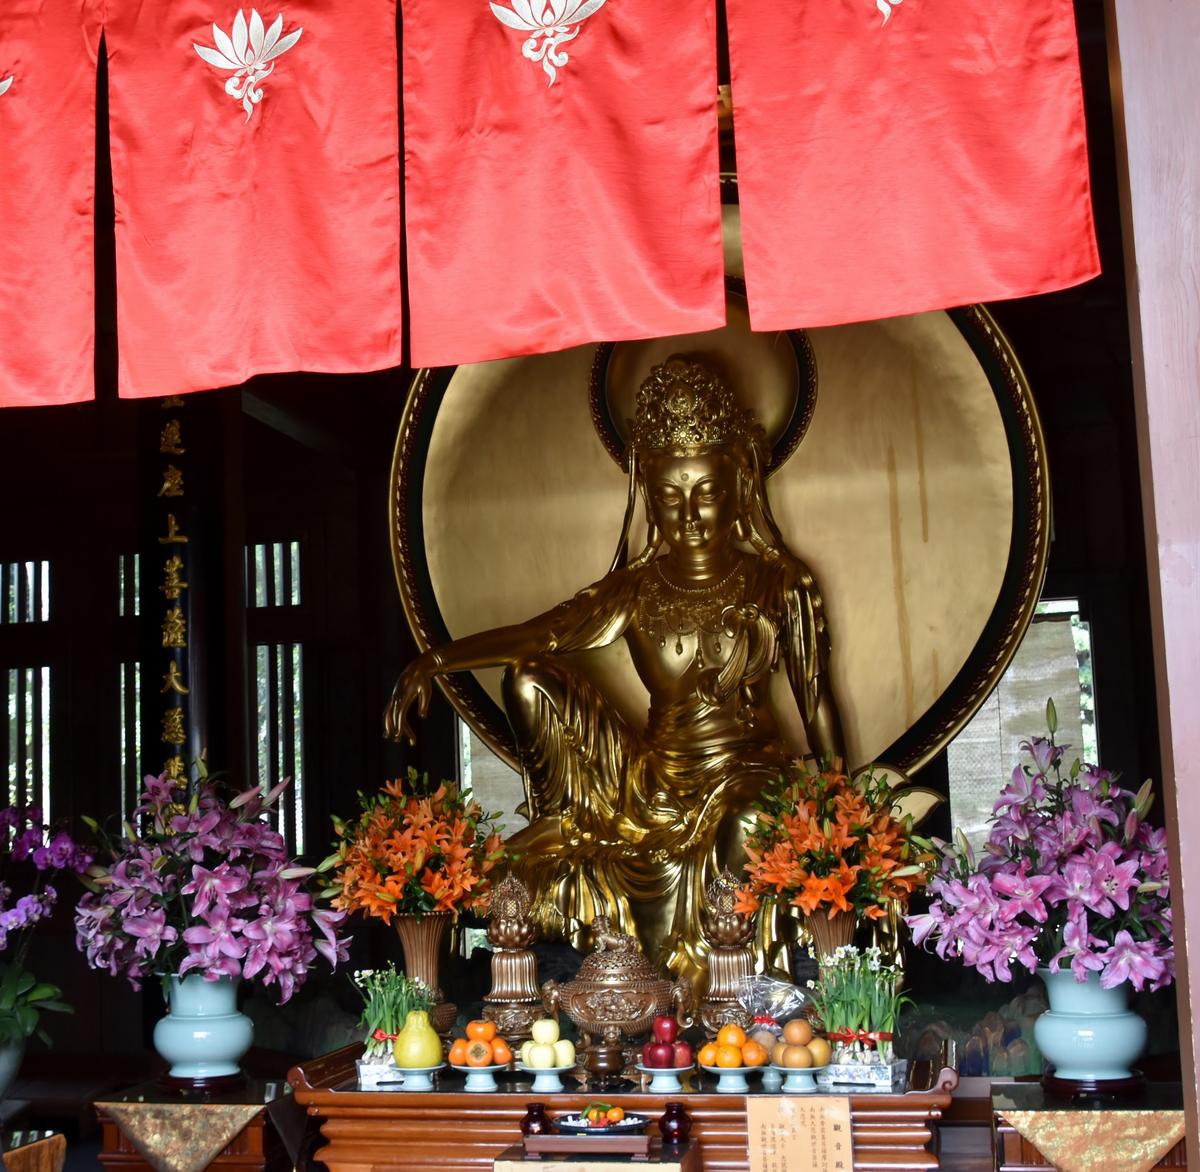 The temple halls hold statues of Sakyamuni Buddha; the Bodhisattva of Mercy, Guanyin; and other bodhisattvas. (Richard Mortel/ CC BY-SA 2.0)